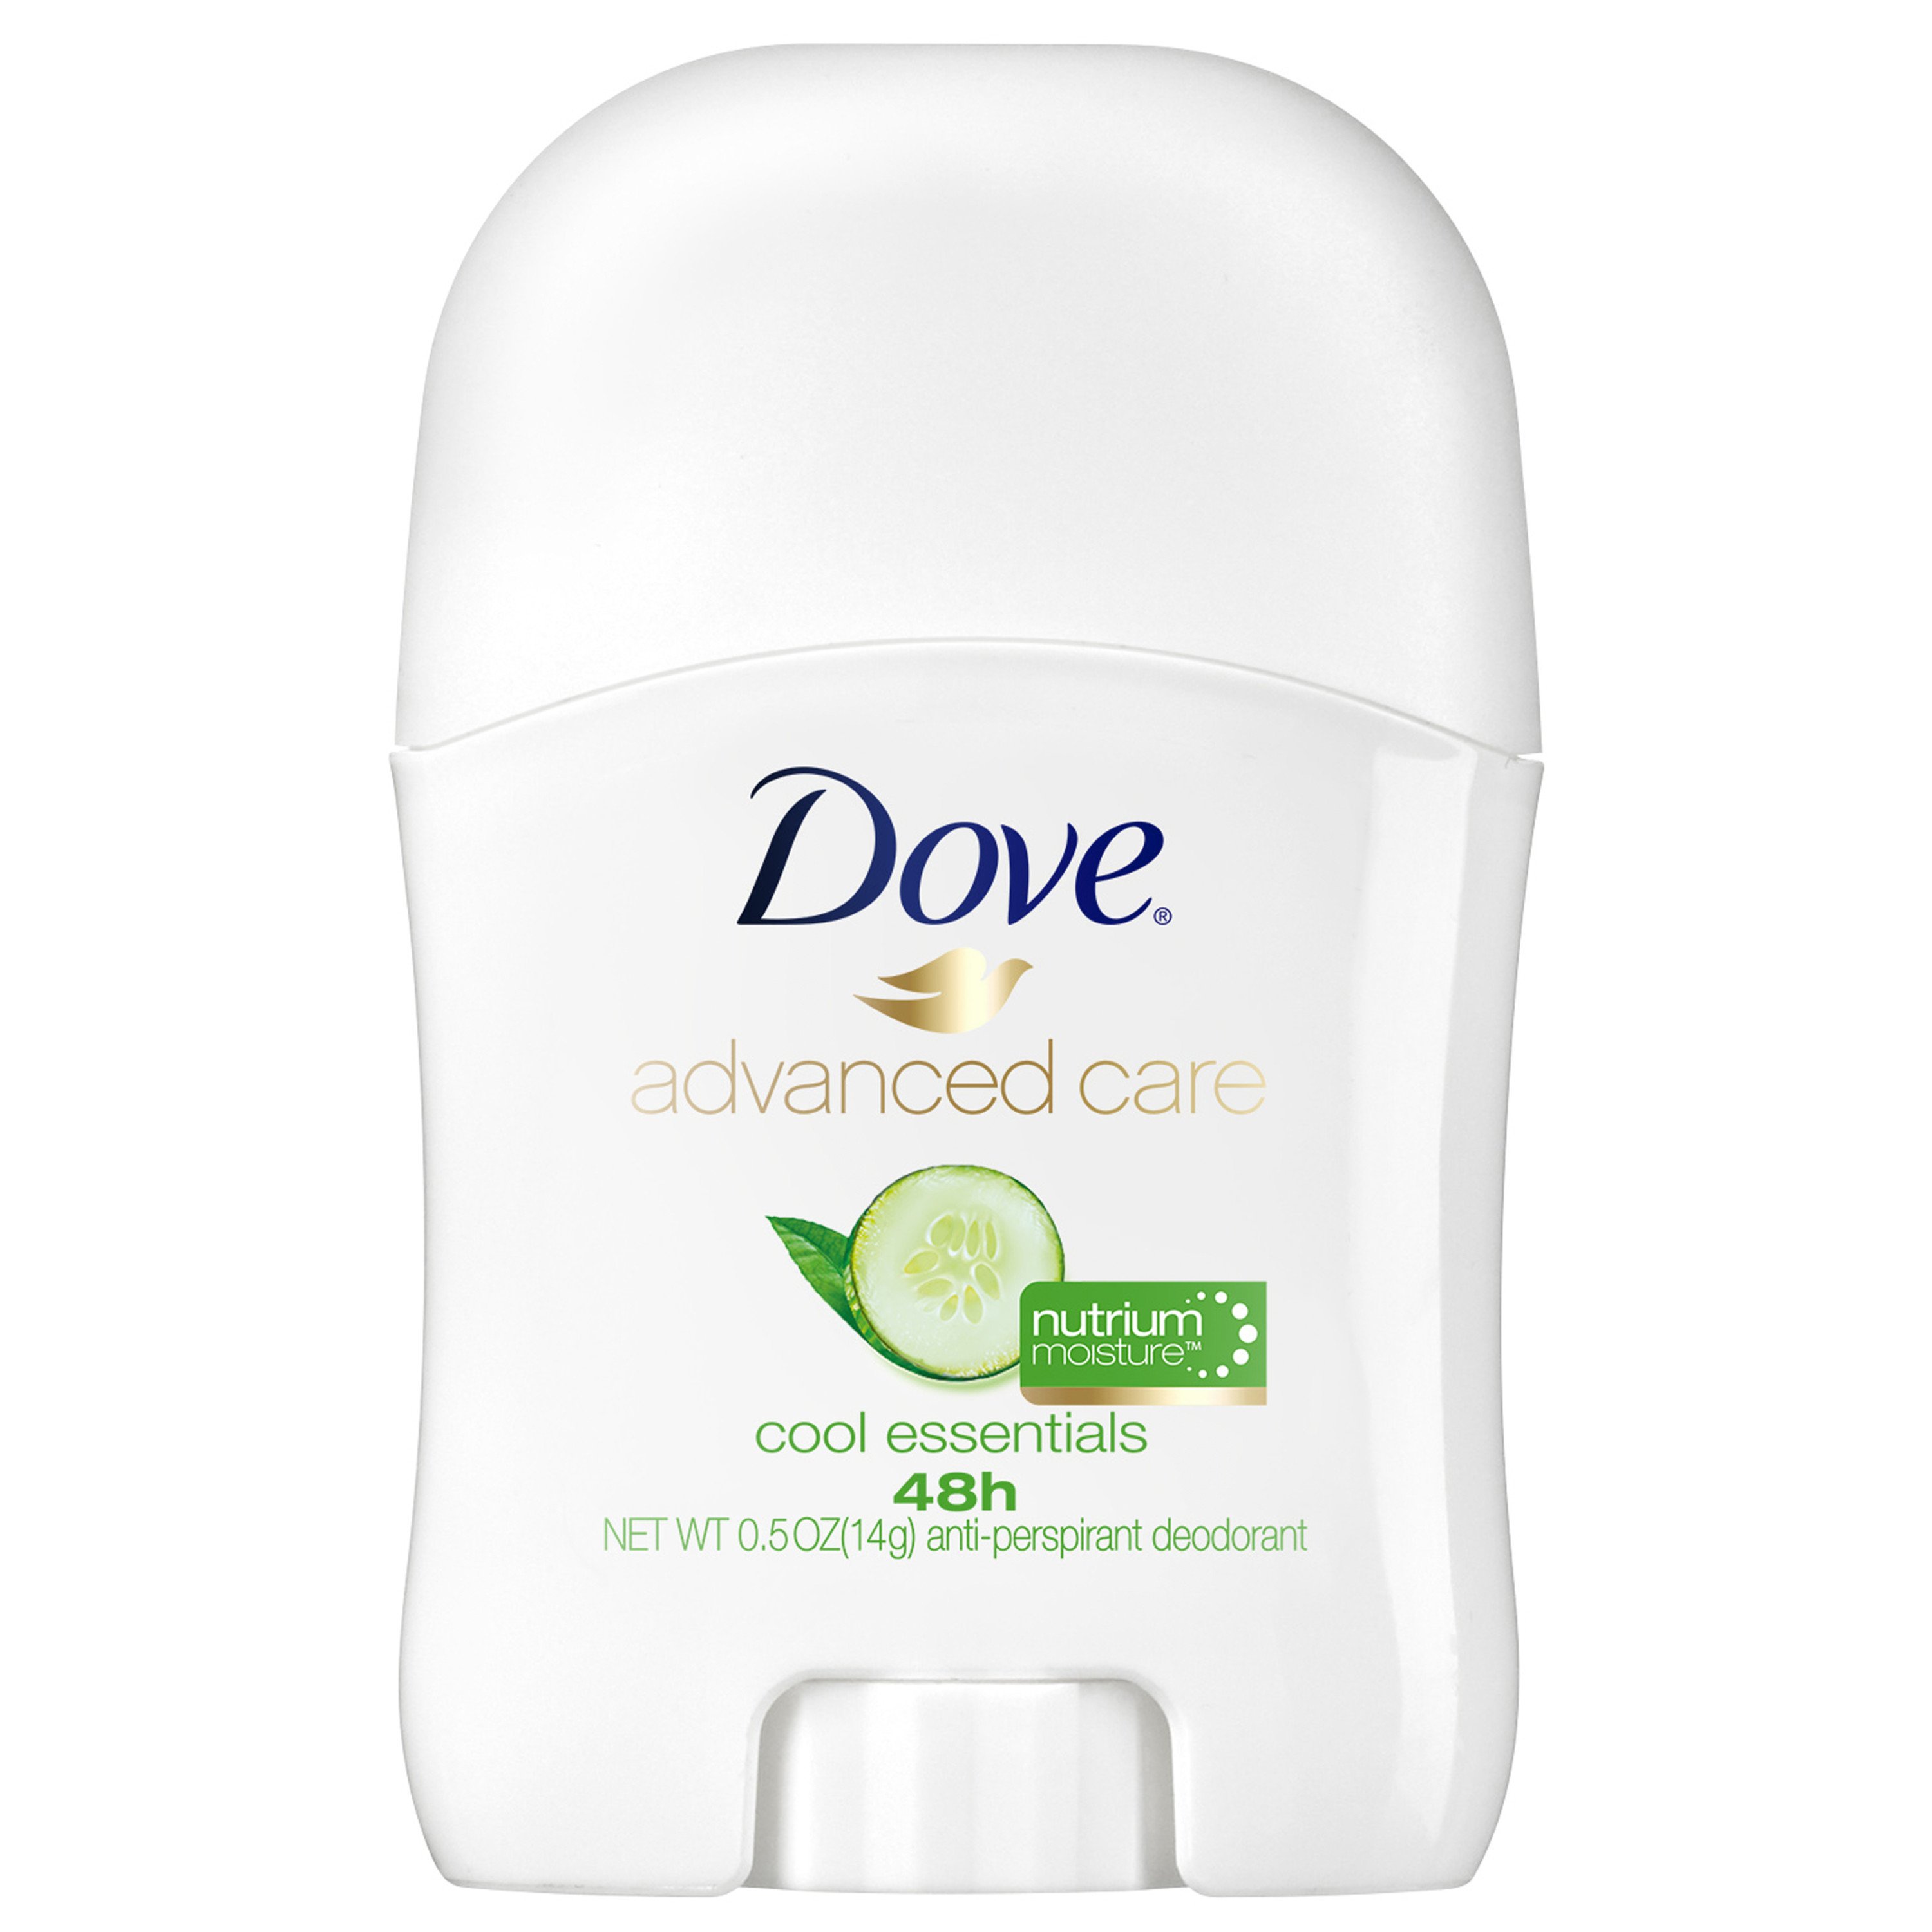 Dove advanced care antiperspirant deodorant Idea